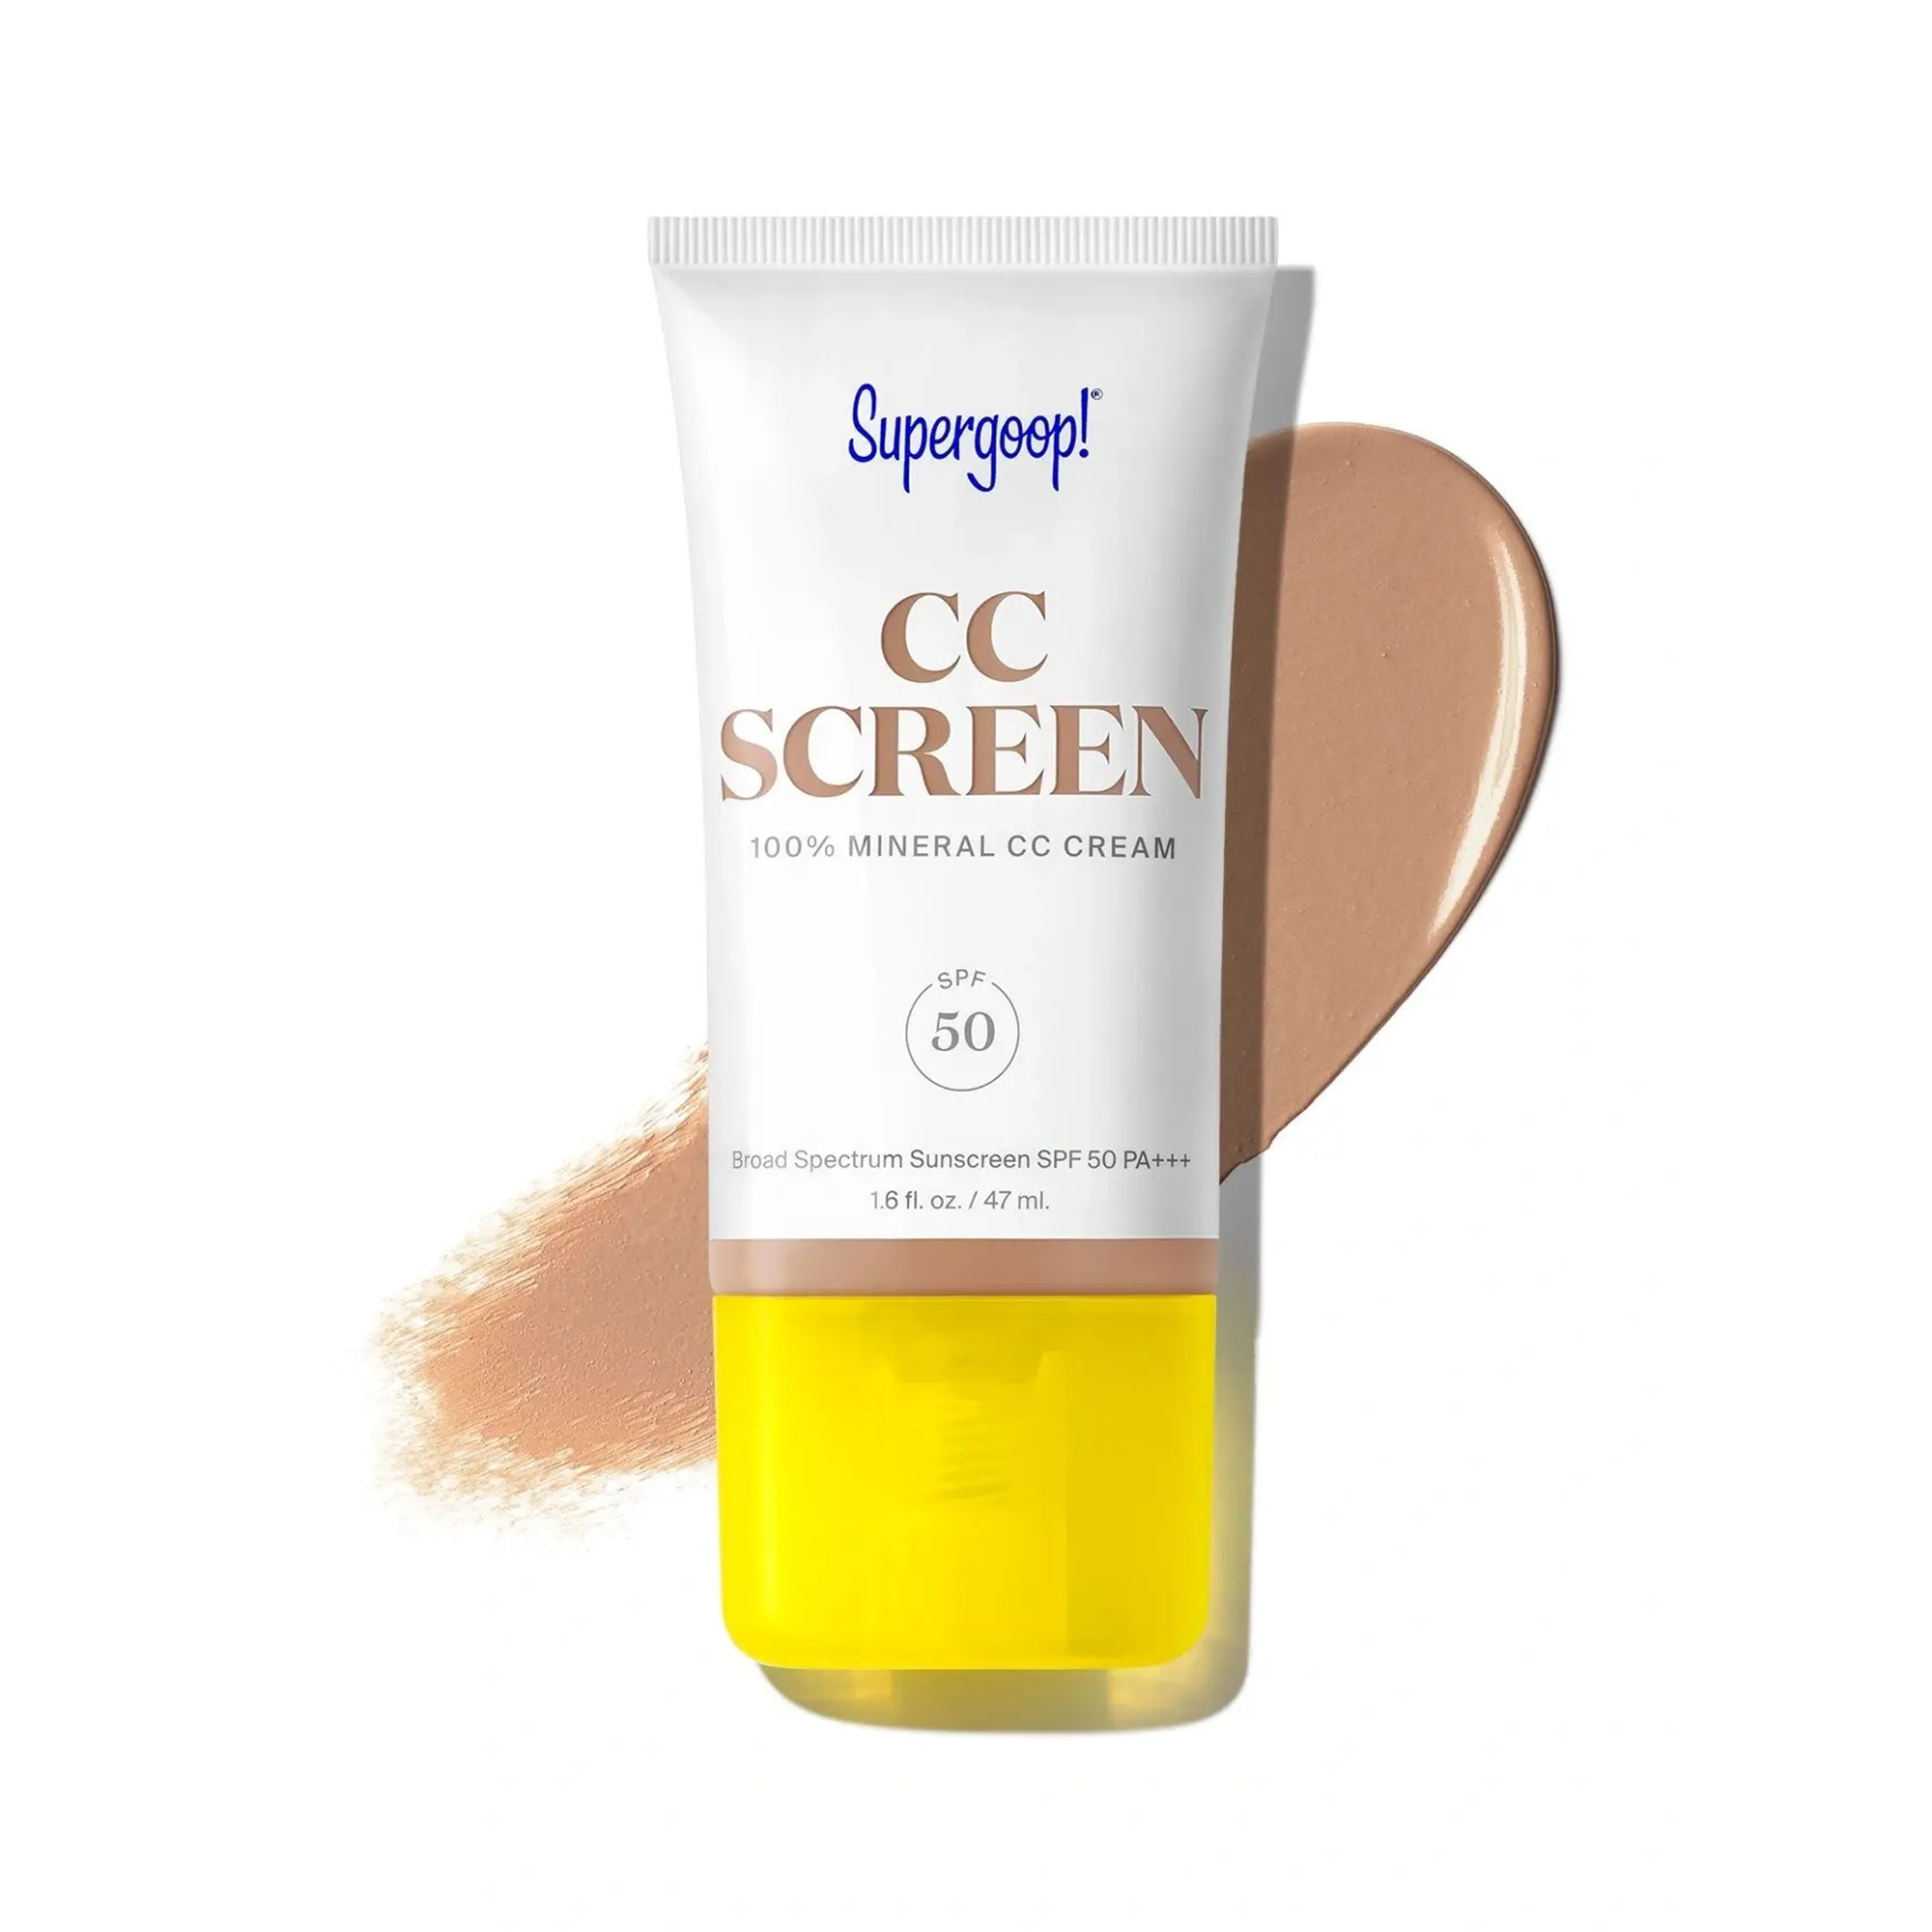 Supergoop! CC Screen 100% Mineral CC Cream SPF 50 / 336W